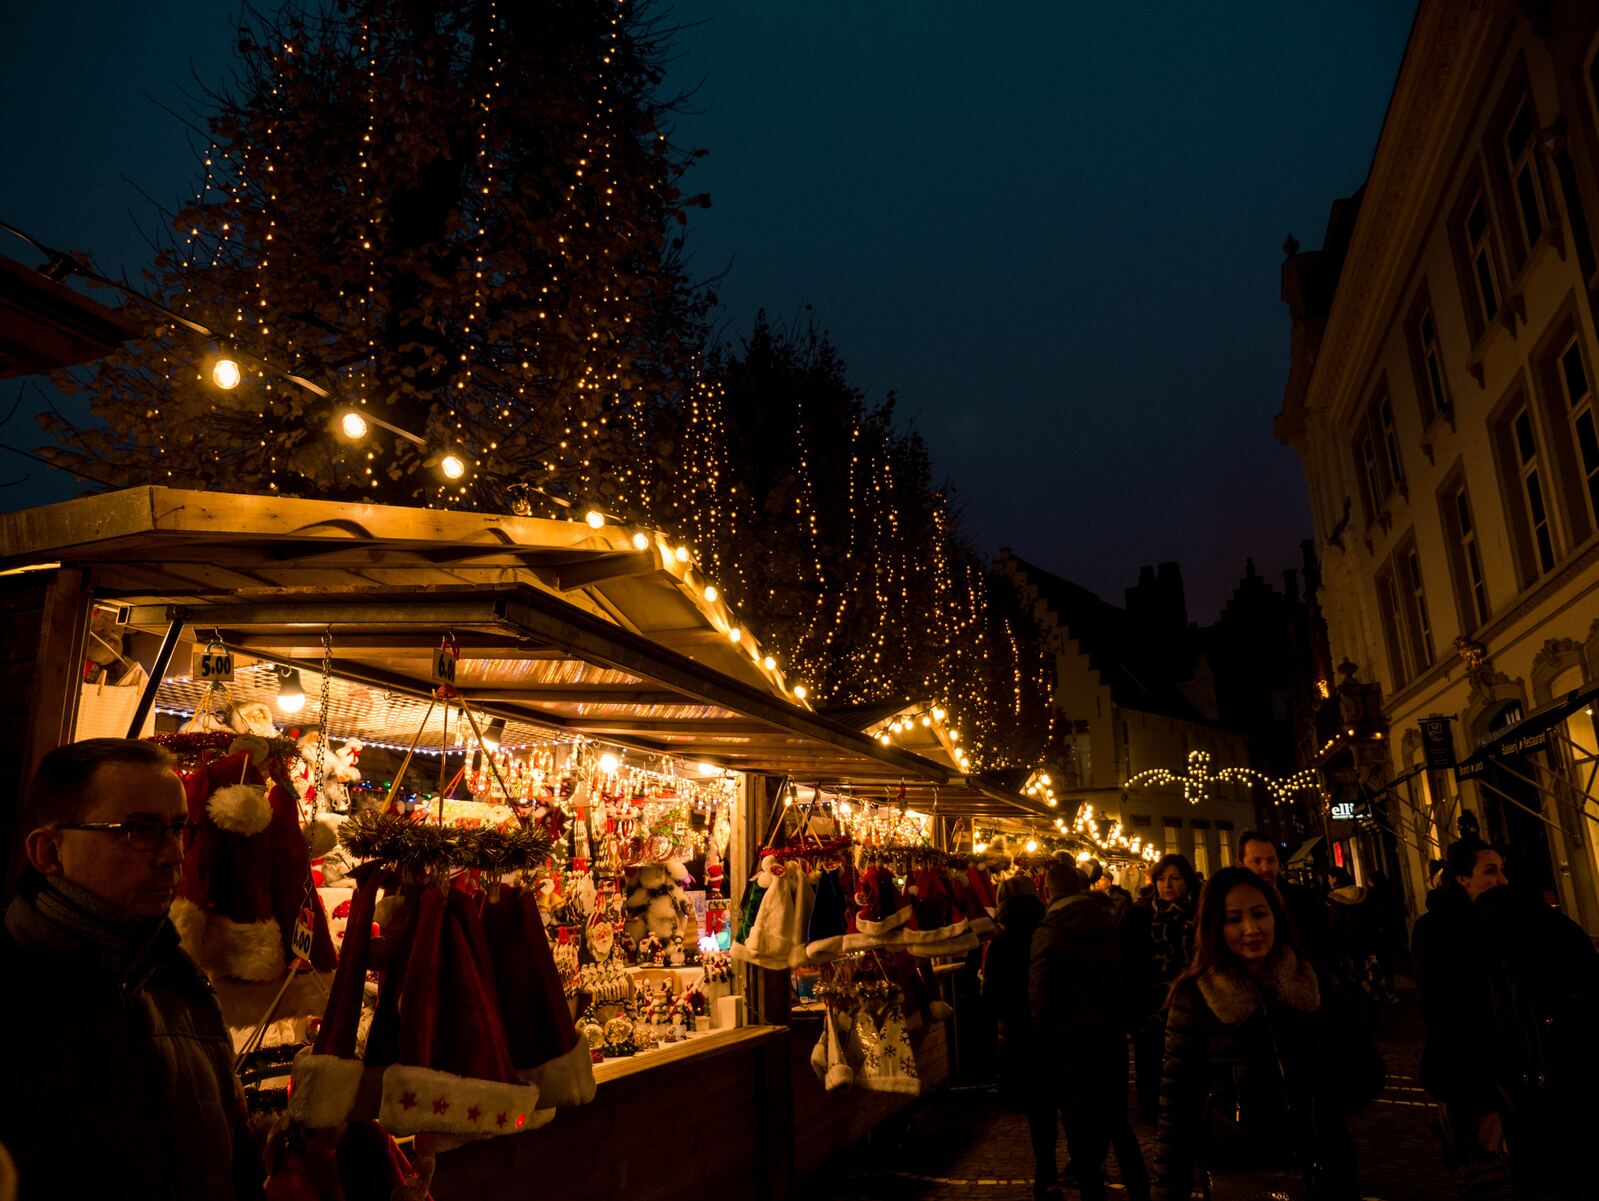 Image of Bruges Christmas Markets by Team PhotoHound